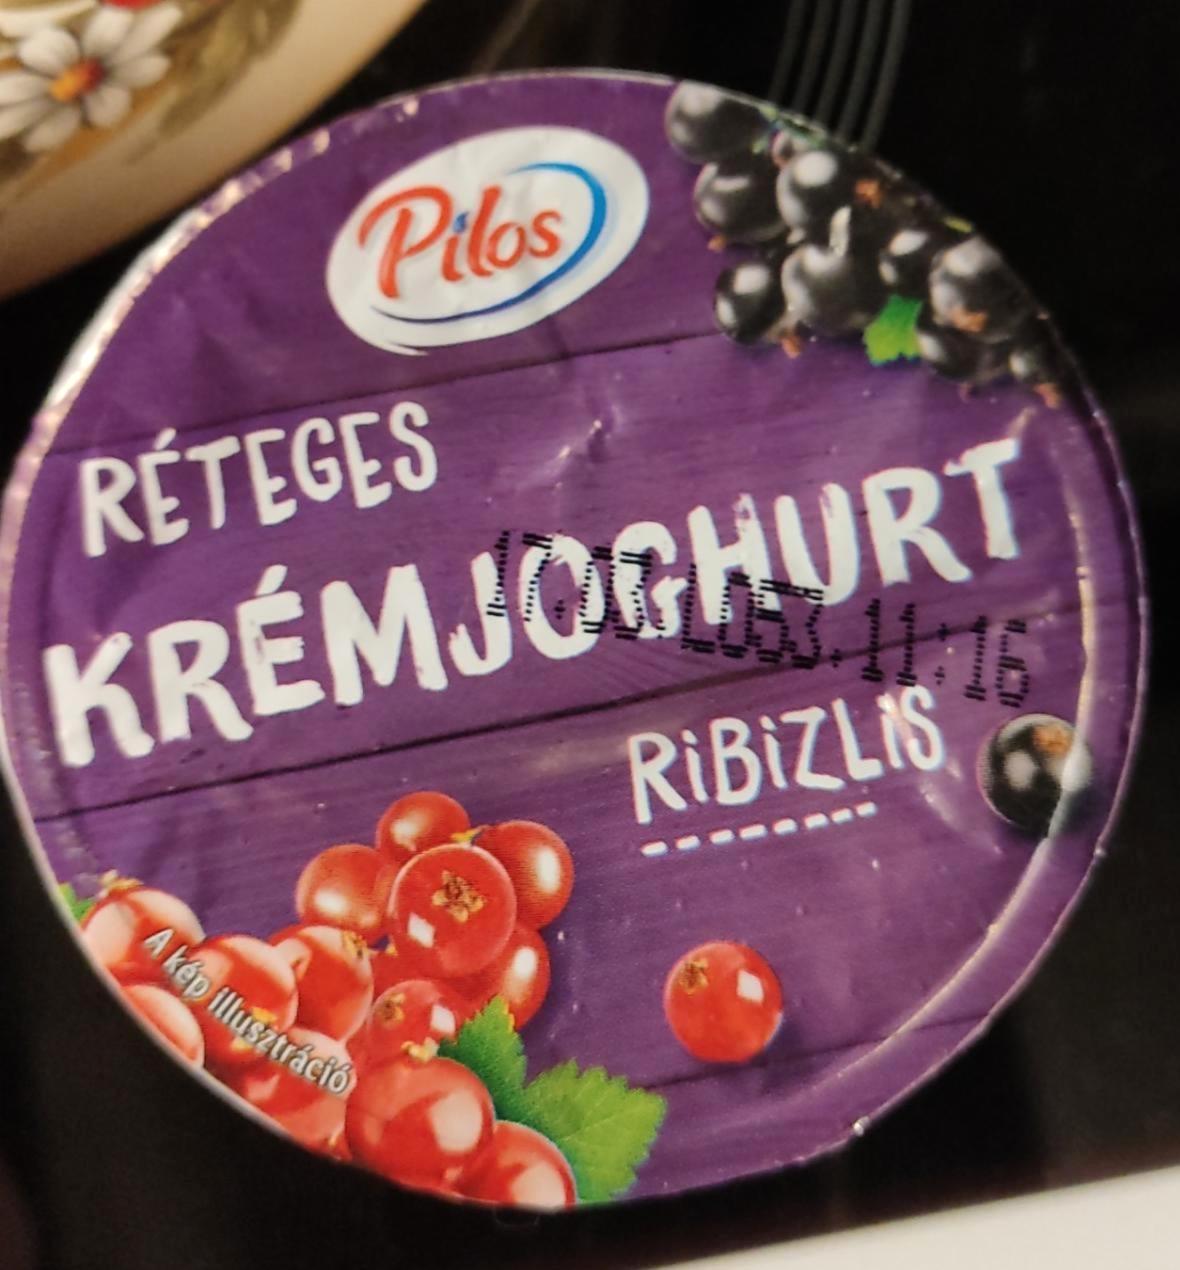 Képek - Réteges krémjoghurt Ribizlis Pilos